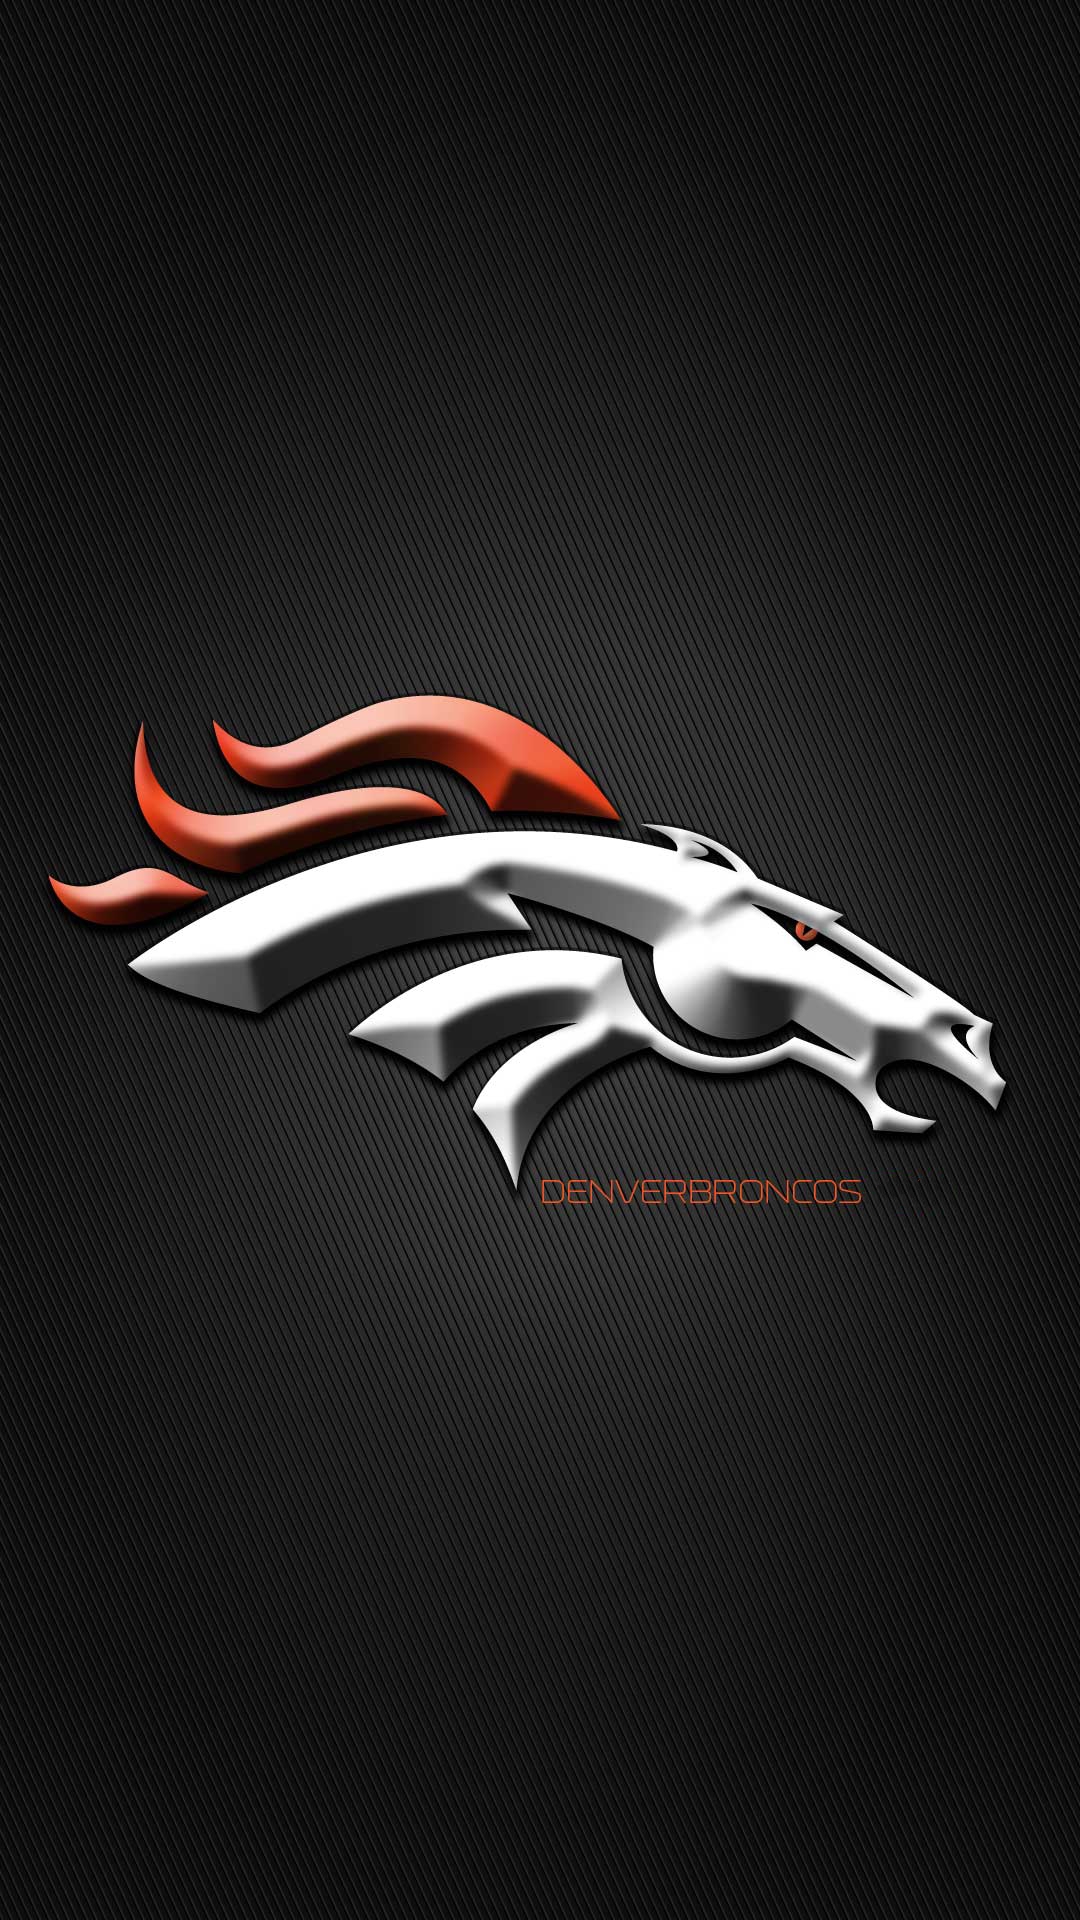 Free Download Denver Broncos iPhone 5 Wallpaper